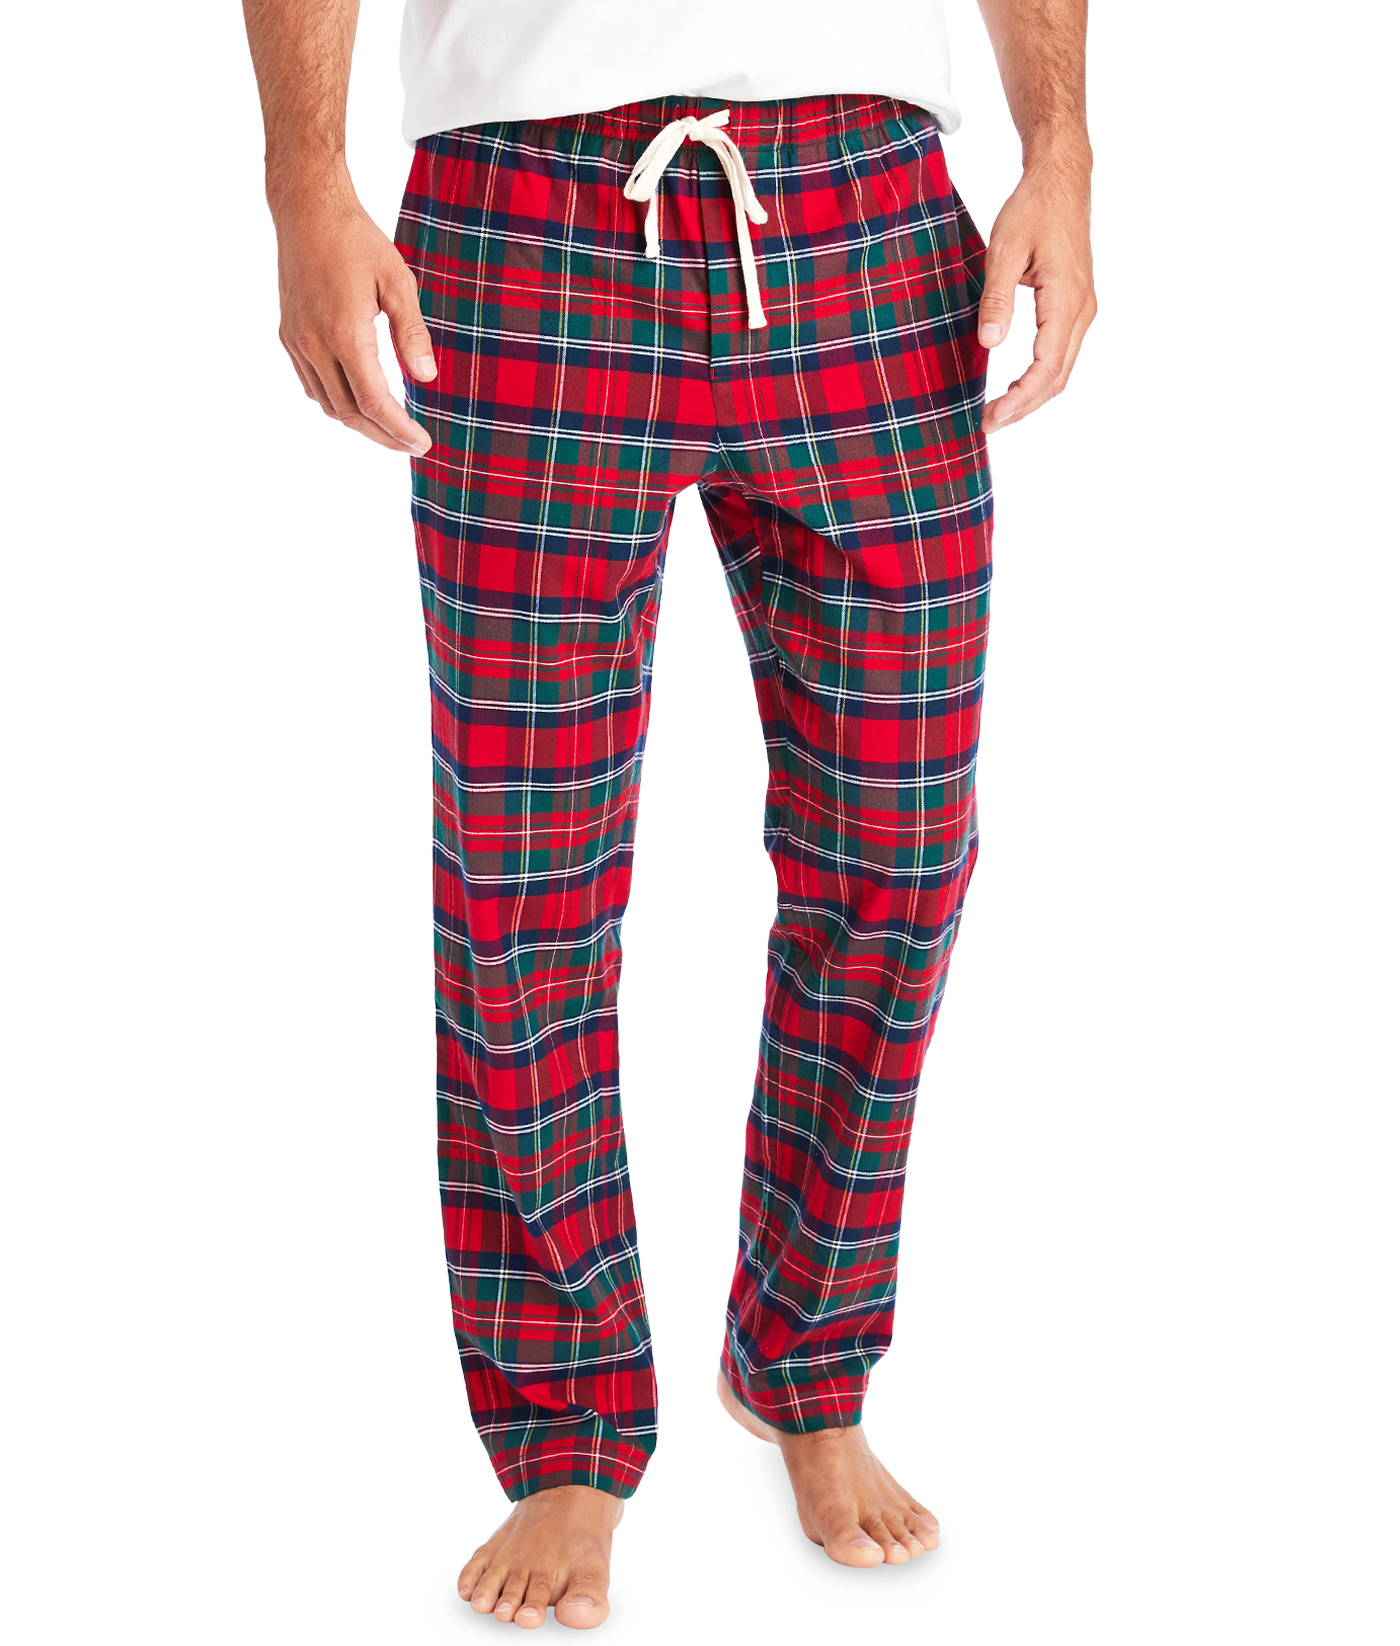 Shop Plaid Flannel Pajama Pants at vineyard vines